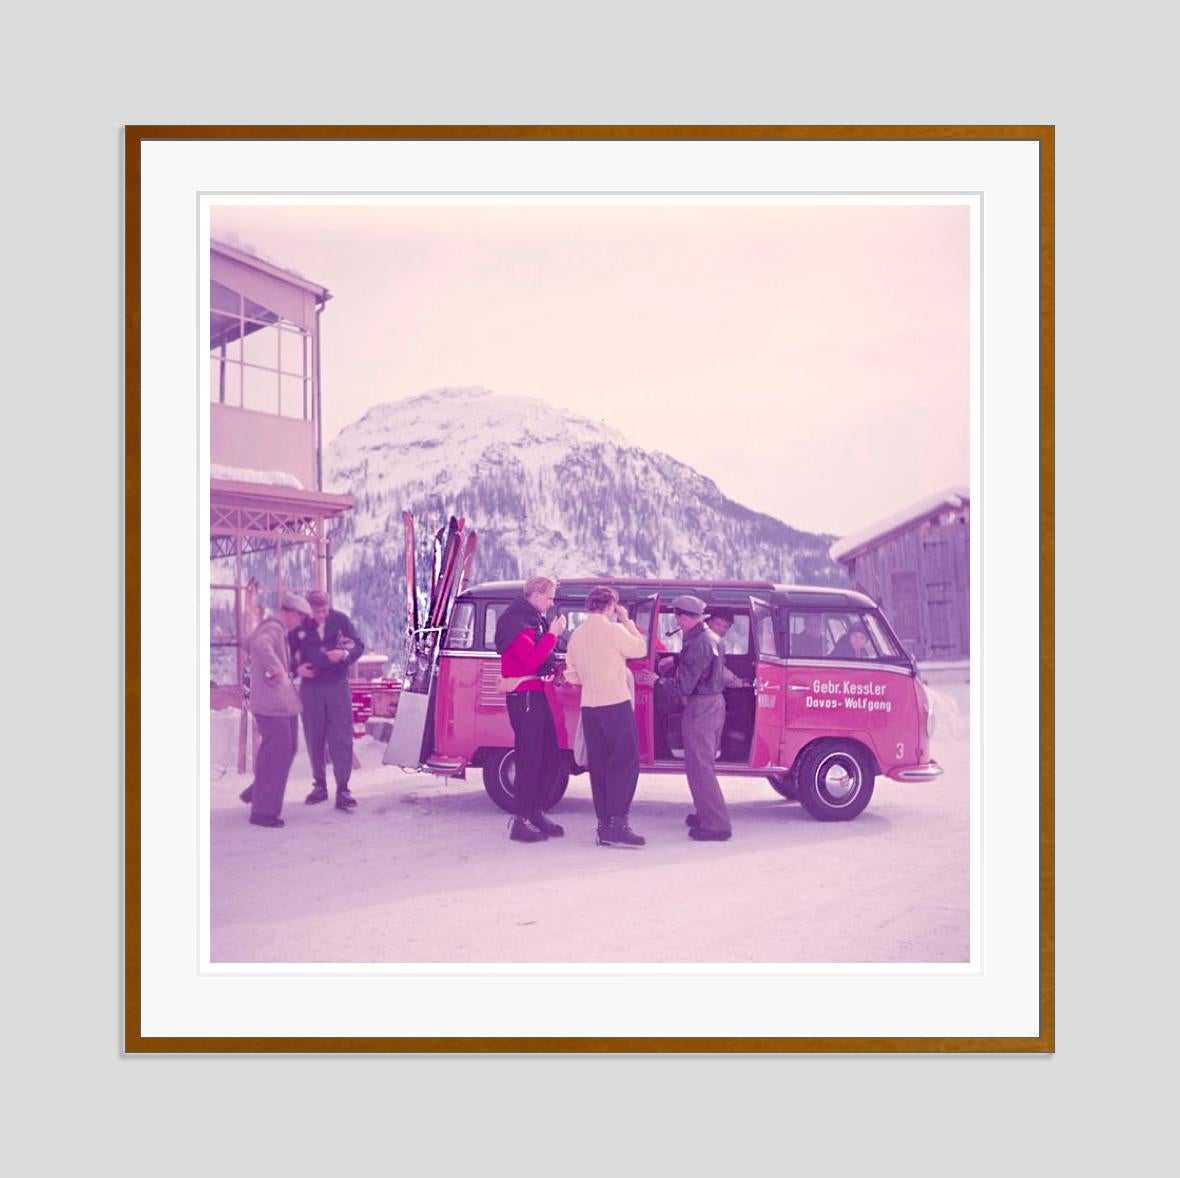 Ski Bus

1954

Skiers board a VW camper van, Klosters, Switzerland, 1954.

by Toni Frissell

30 x 30